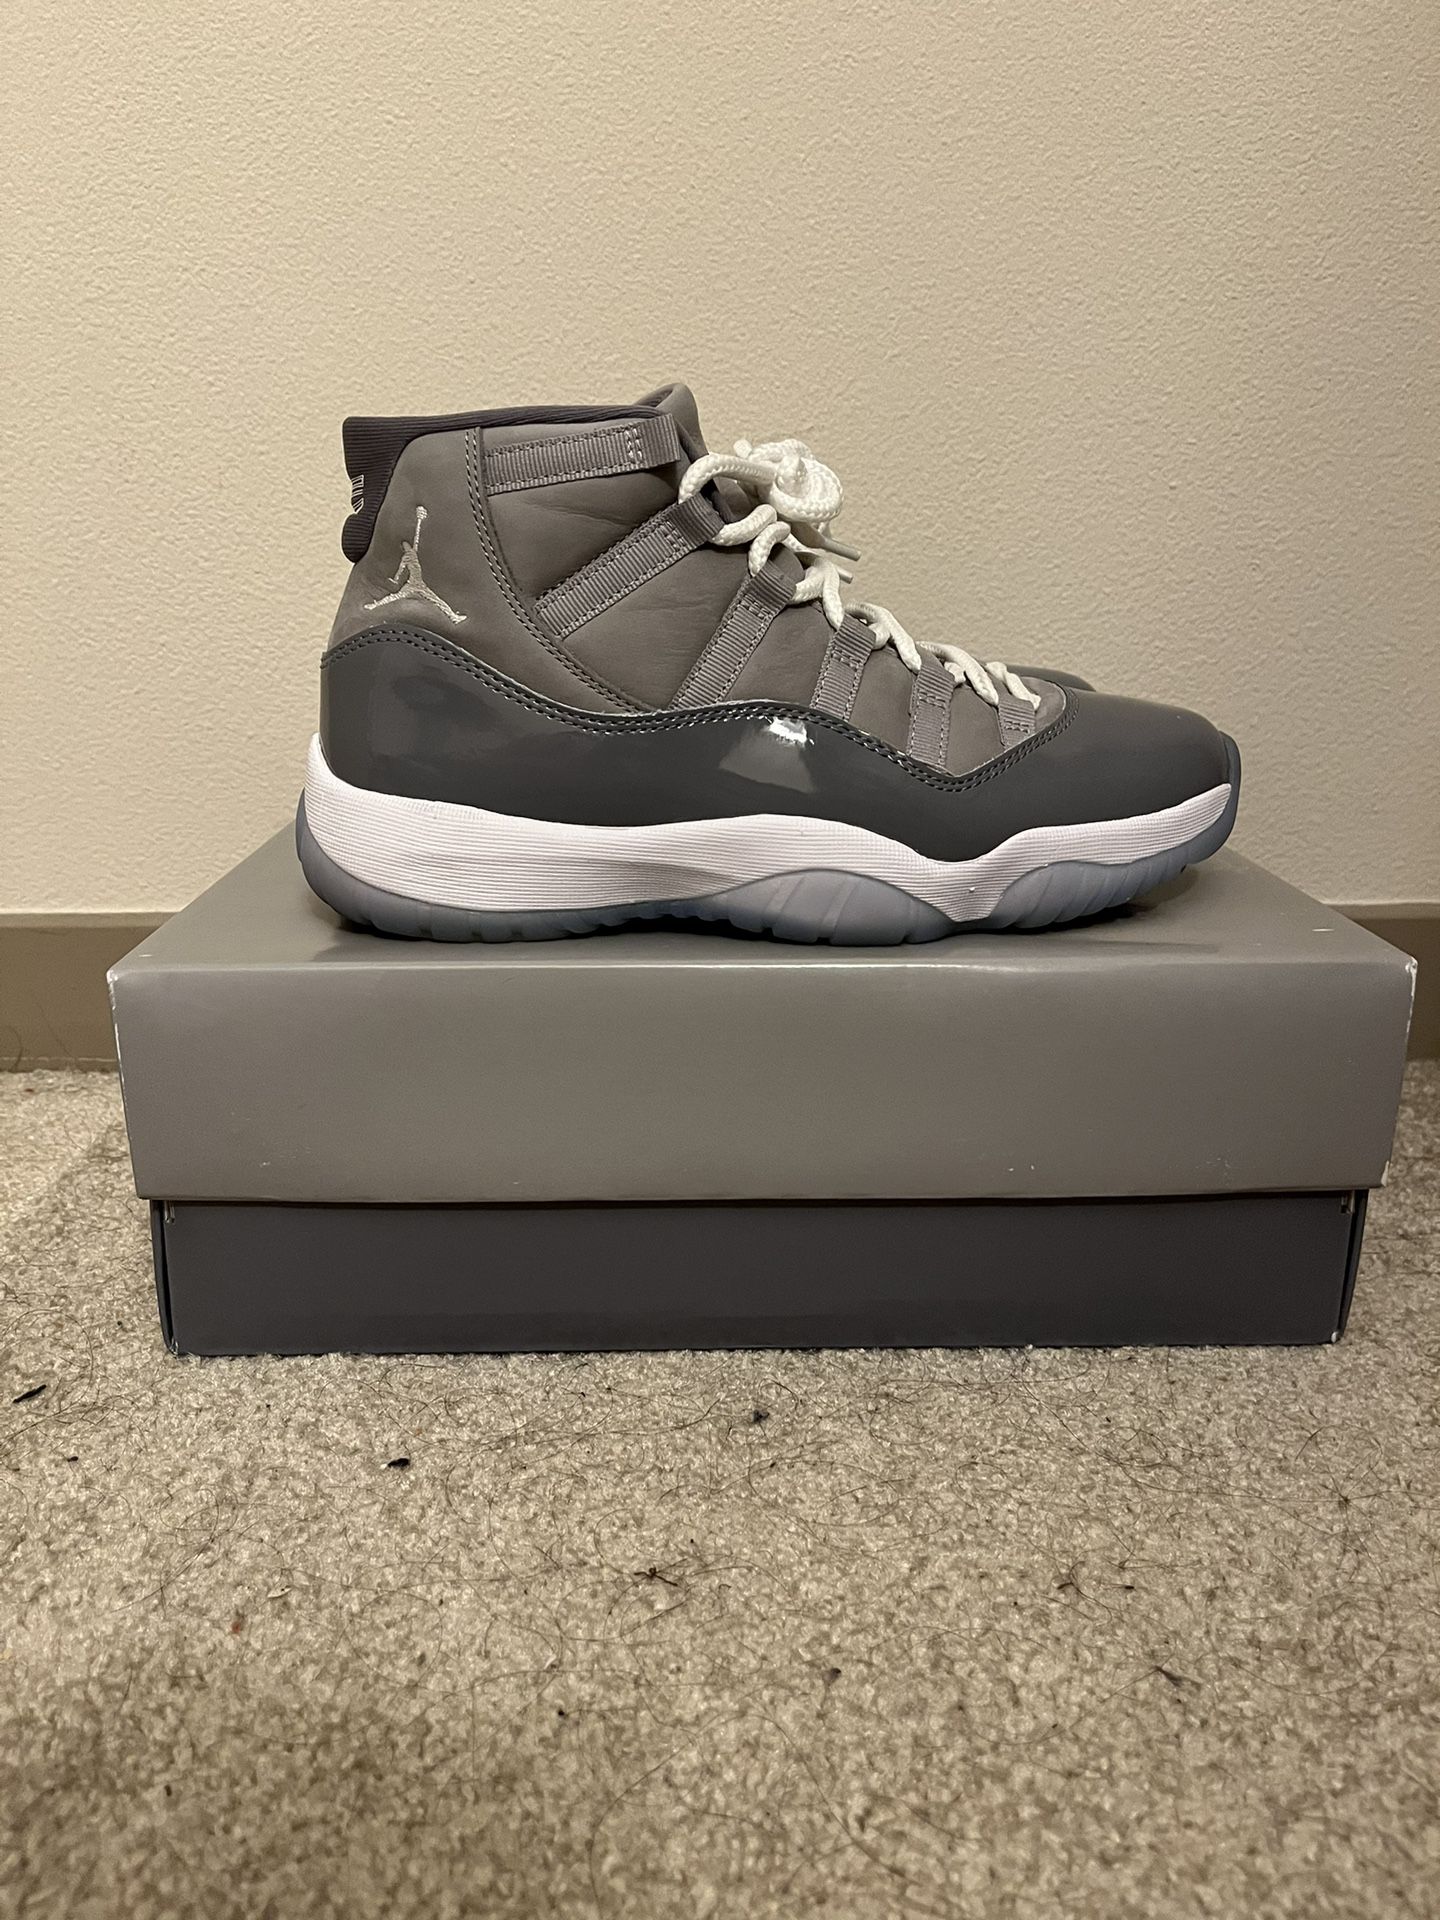 Jordan 11 “Cool Grey” Size 8.5